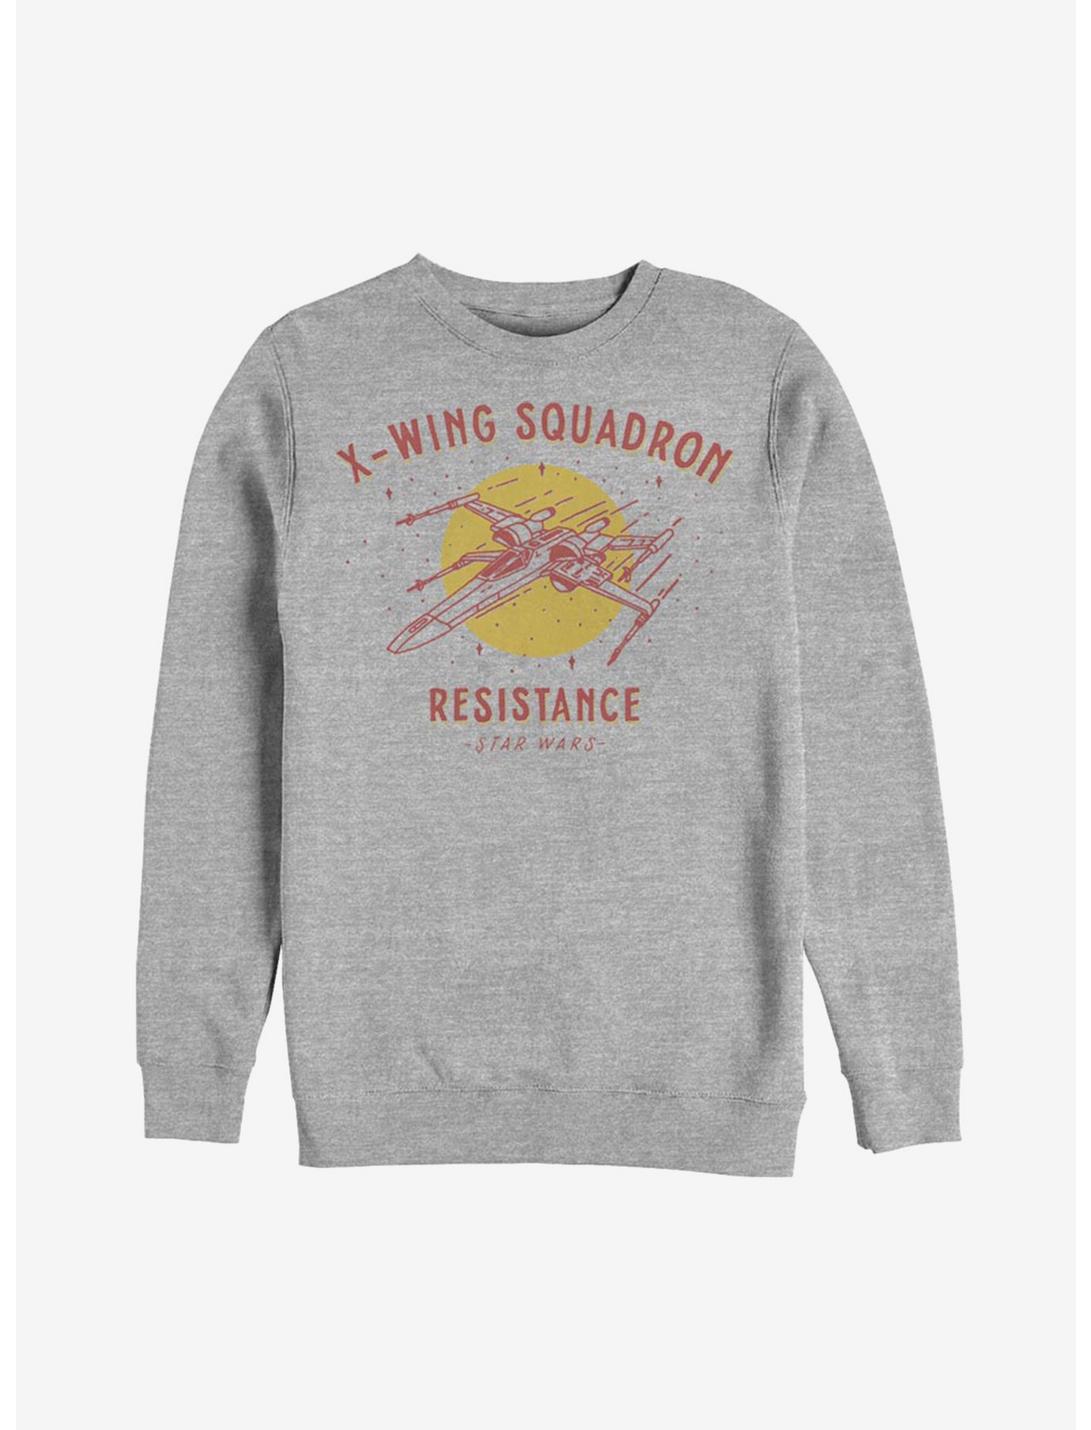 Star Wars Episode IX The Rise Of Skywalker X-Wing Squadron Resistance Sweatshirt, ATH HTR, hi-res